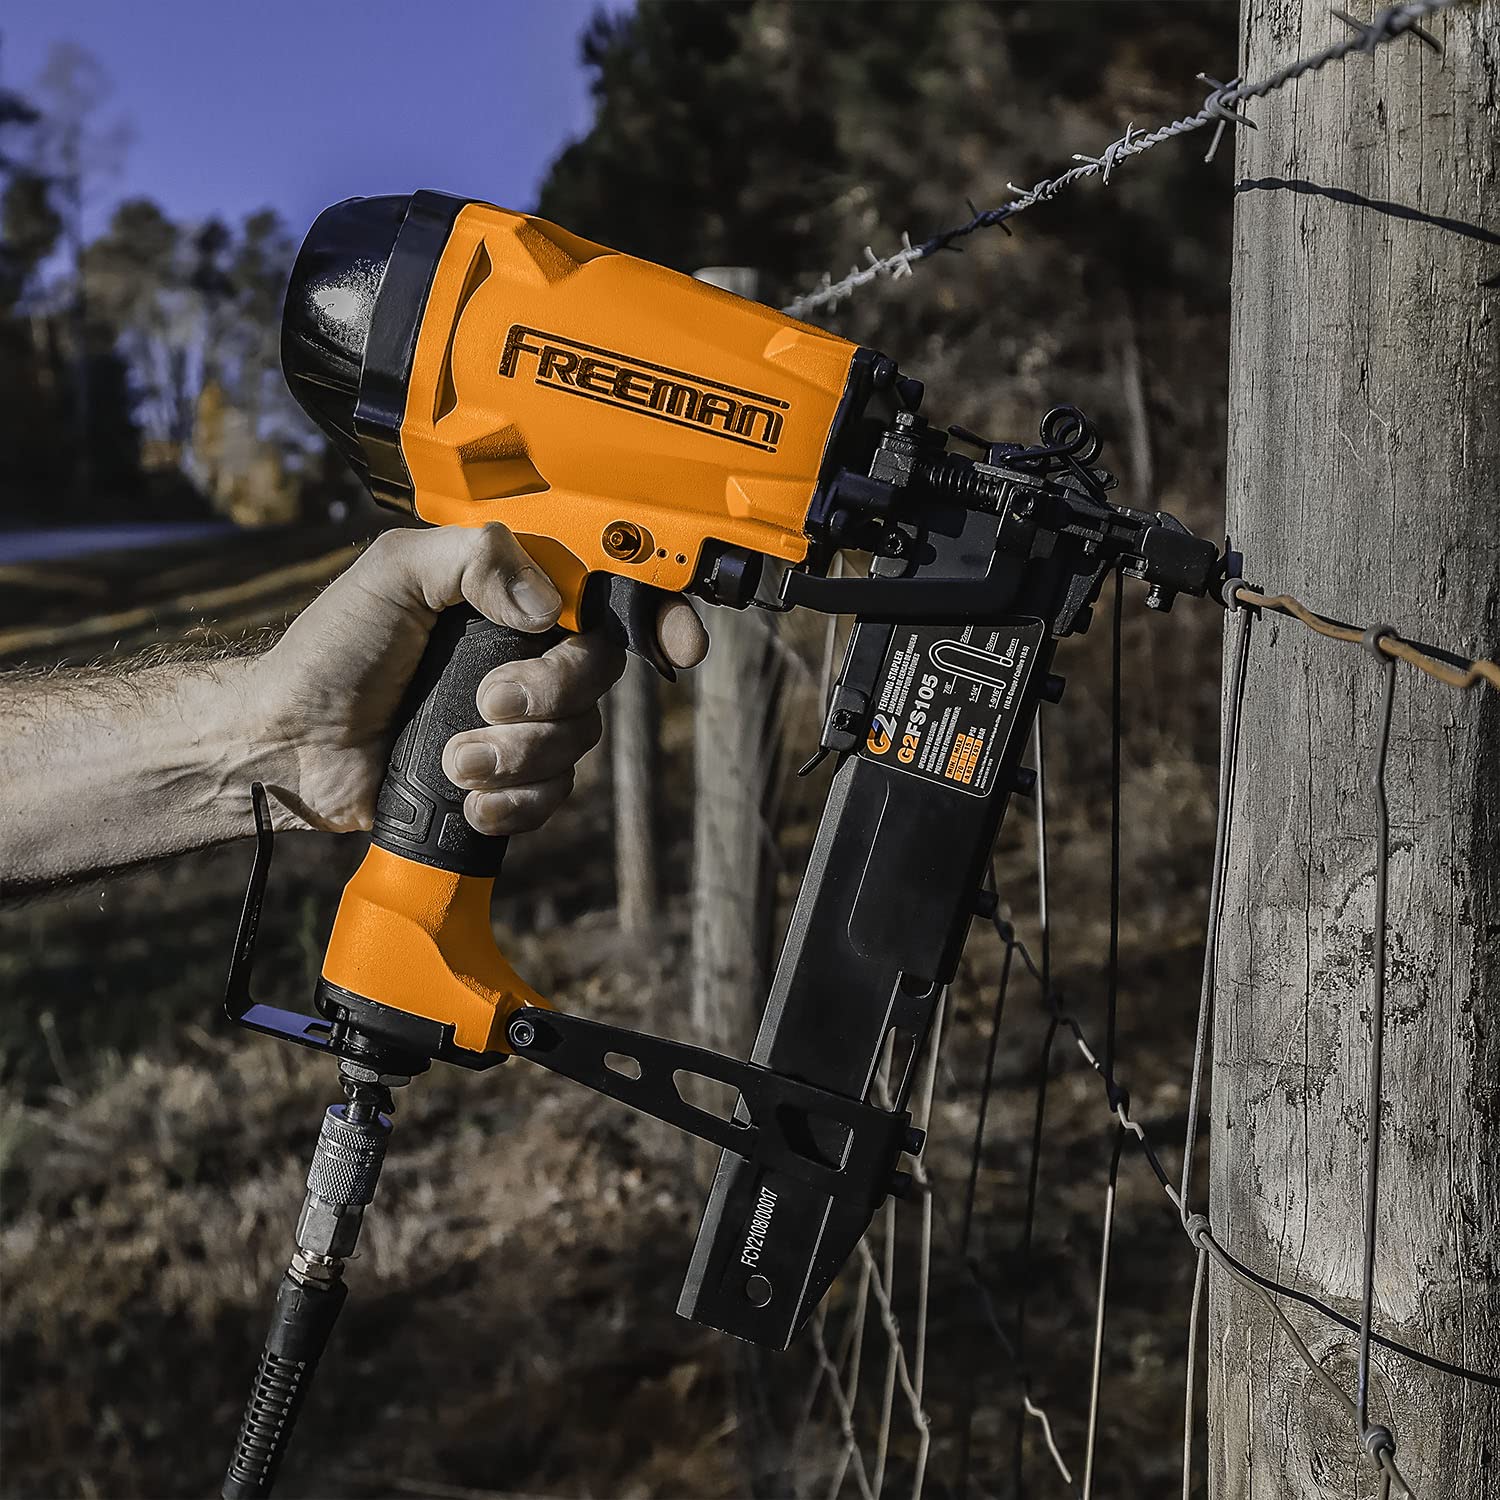 Freeman G2FS105 2nd Generation Pneumatic 10.5-Gauge 1-9/16" Fencing Stapler with Adjustable Metal Belt Hook and 1/4" NPT Air Connector